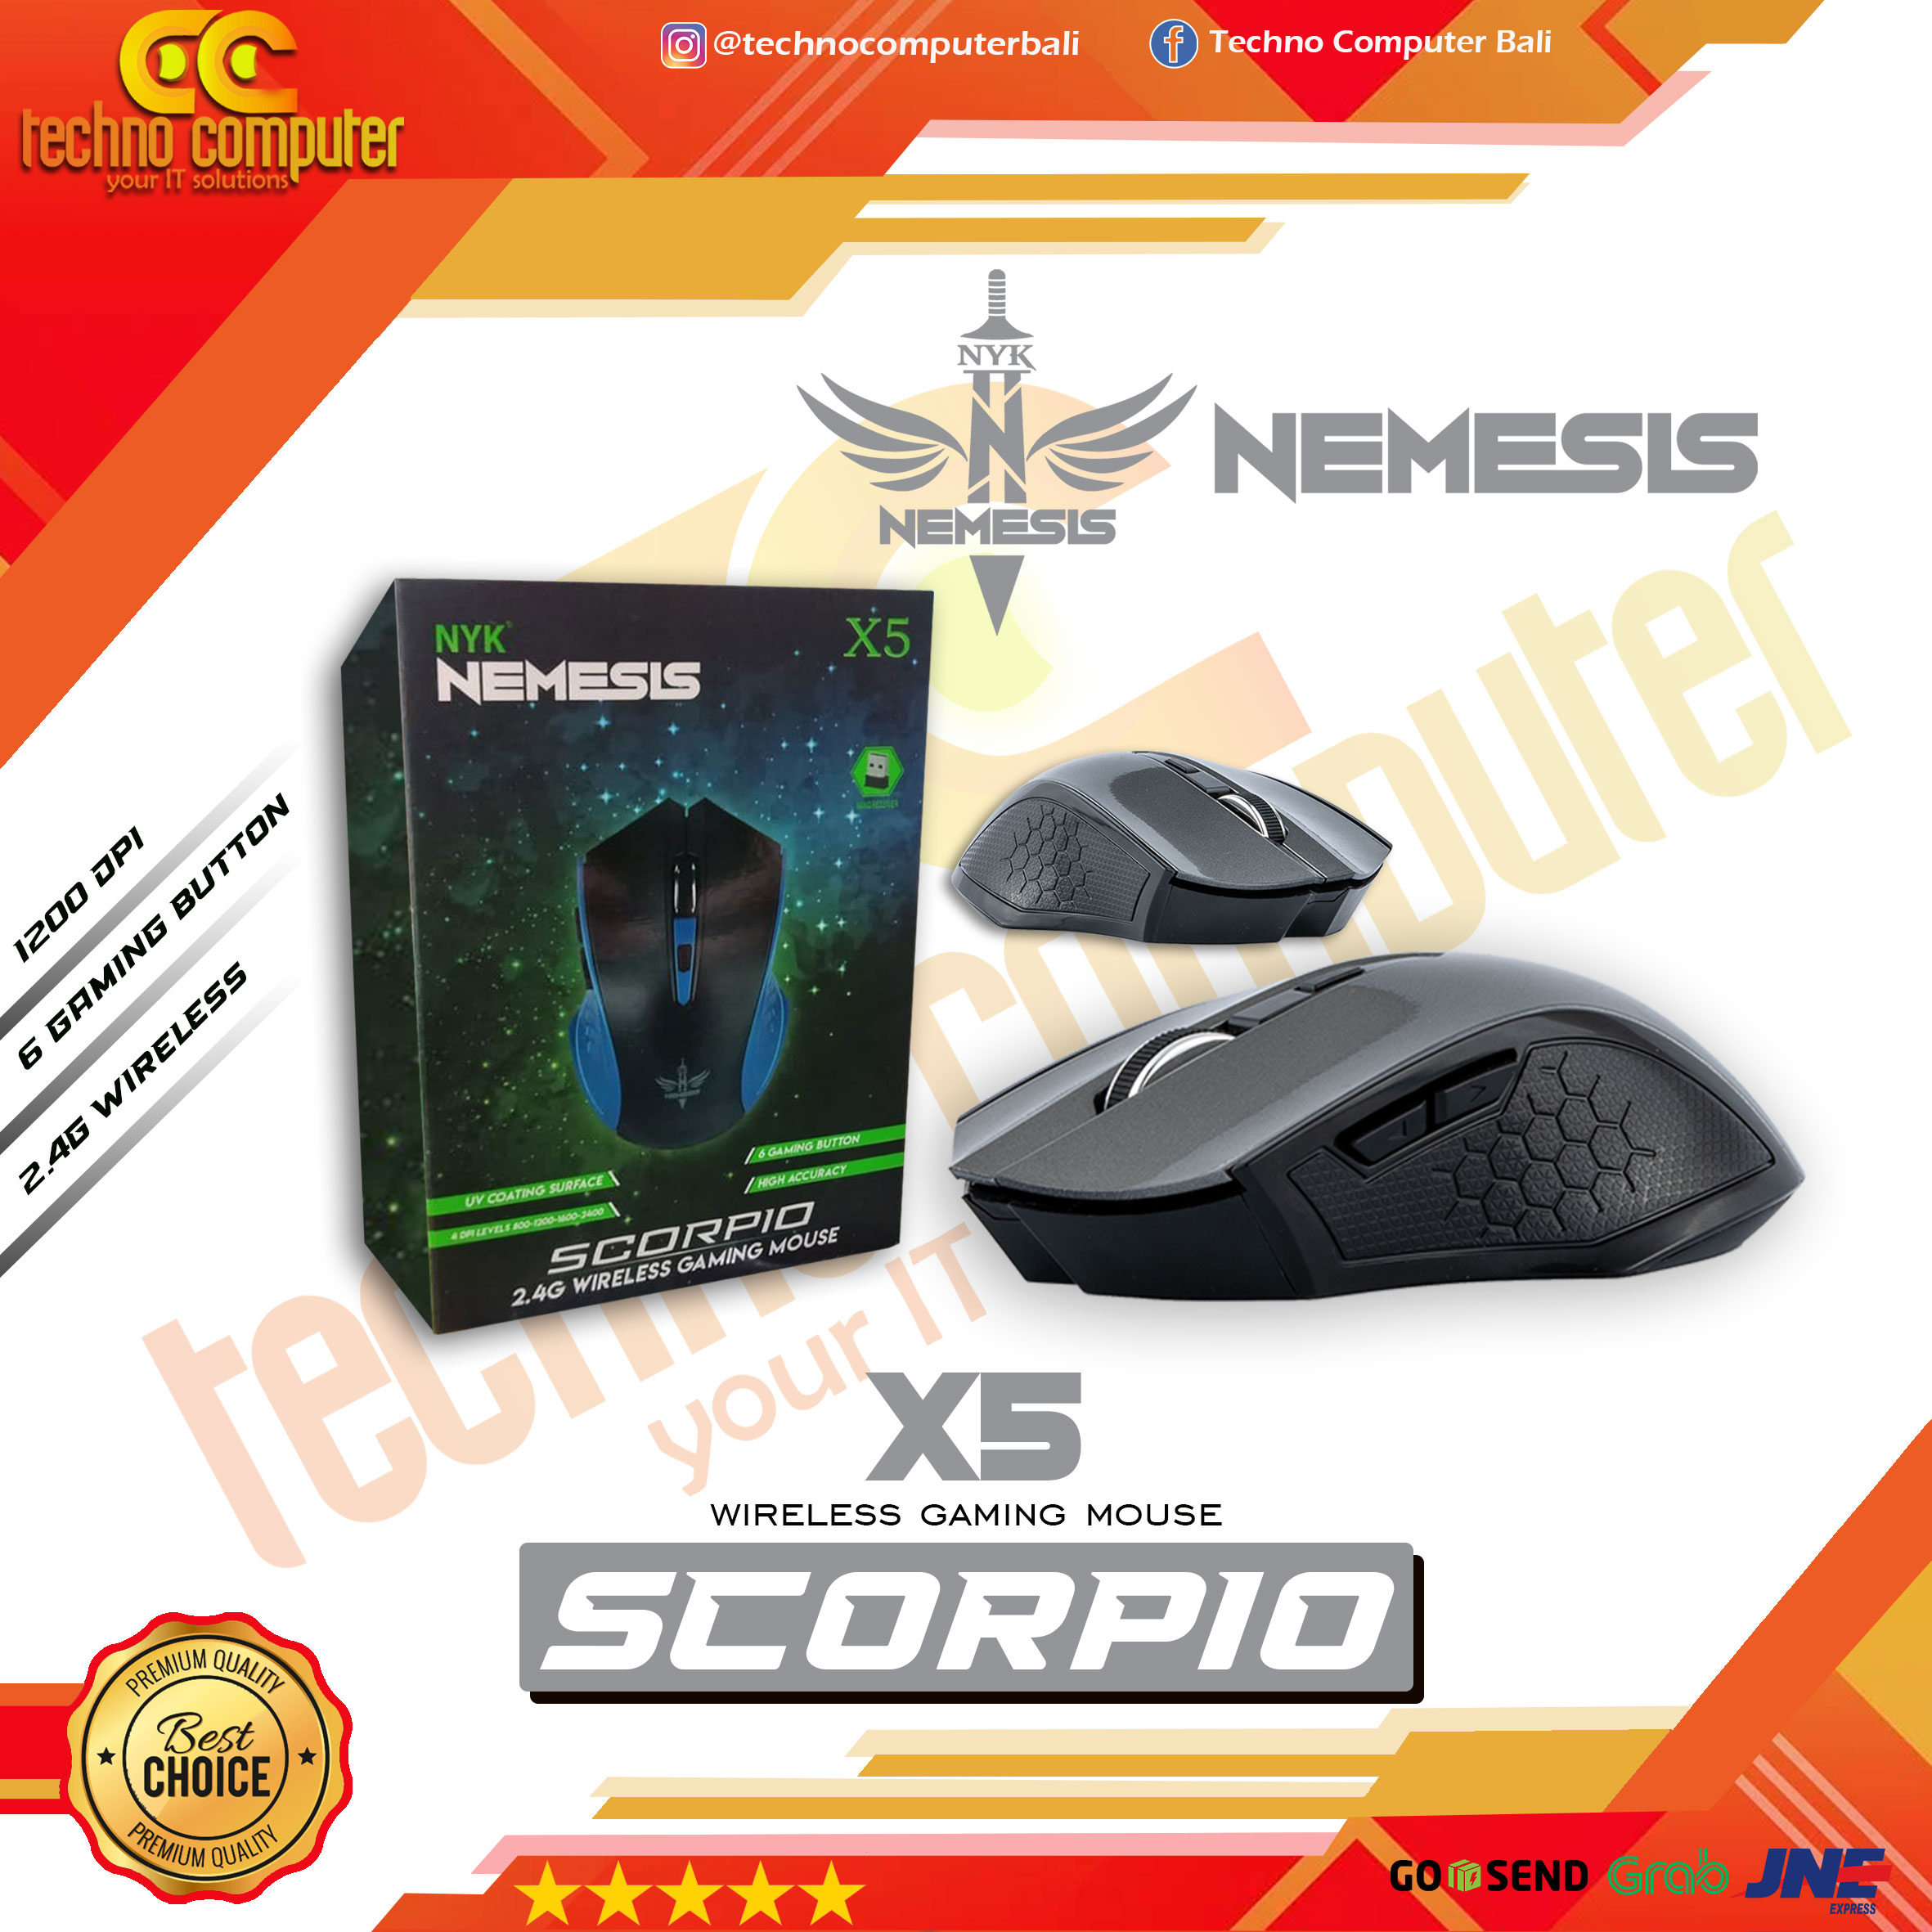 NYK Nemesis SCORPIO X5 - Gaming Mouse